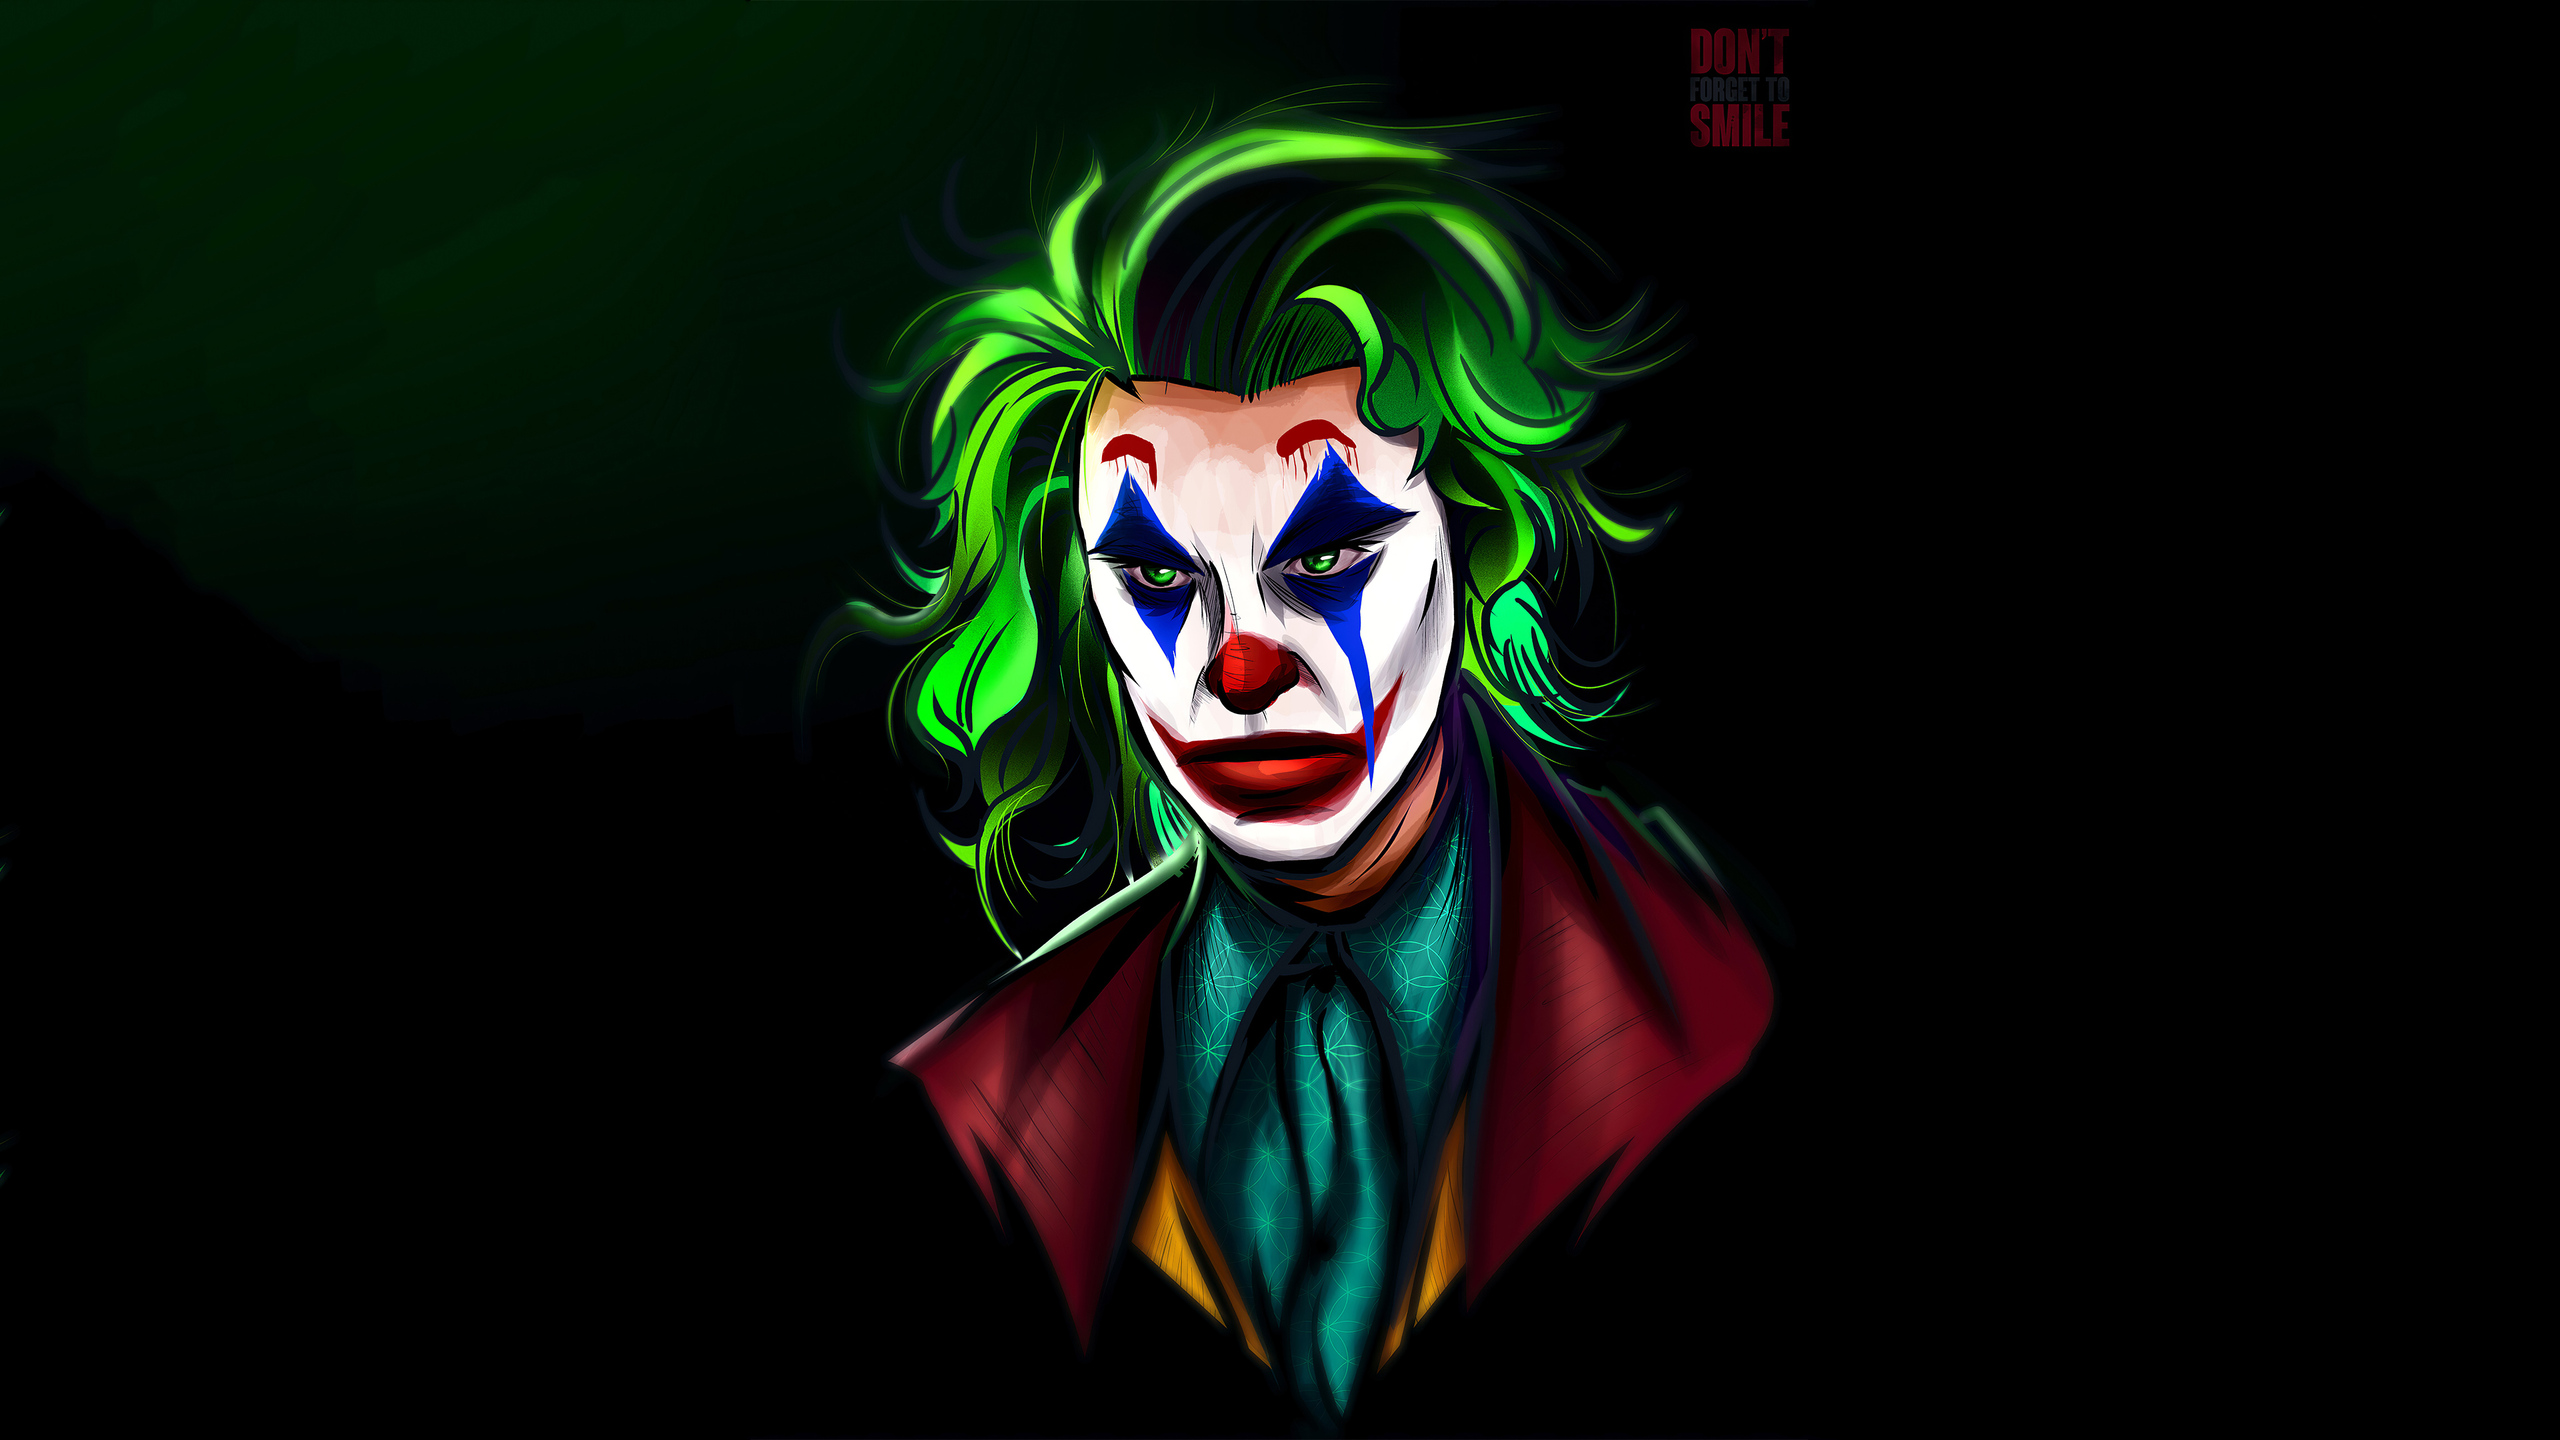 High Quality Pics Of Joker / the joker 1920x1080 wallpaper High Quality